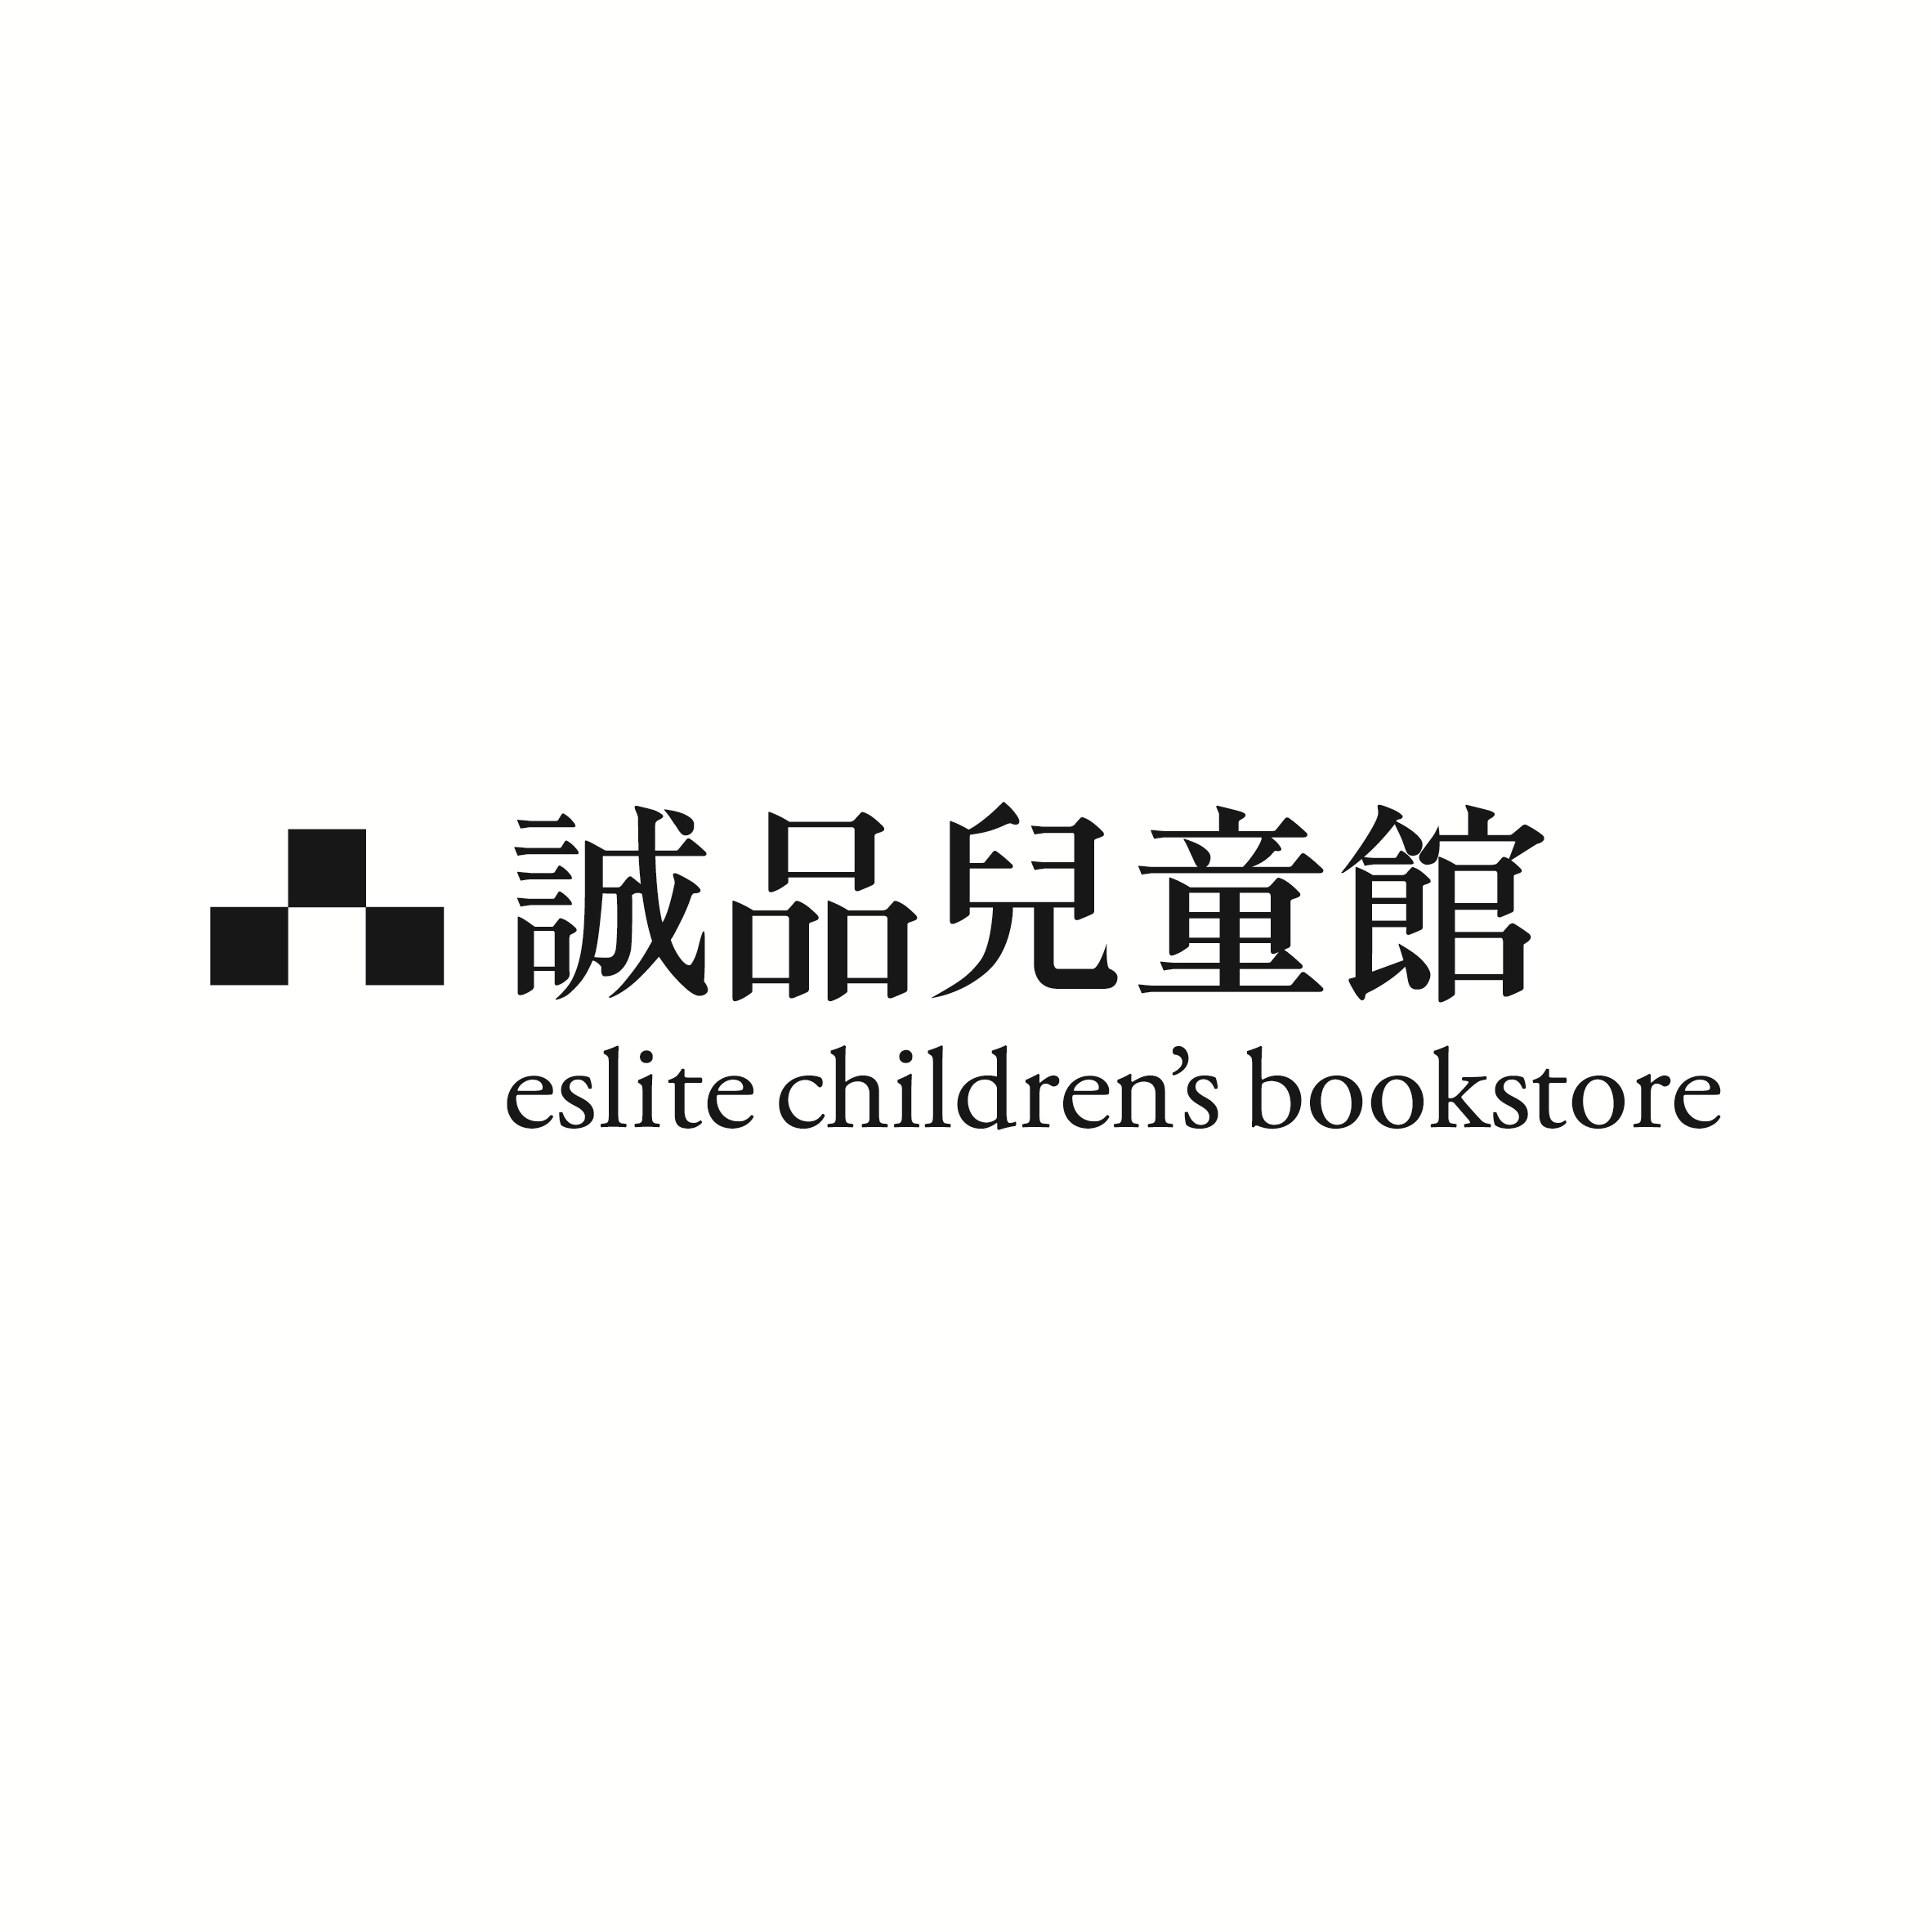 eslite children's bookstore  